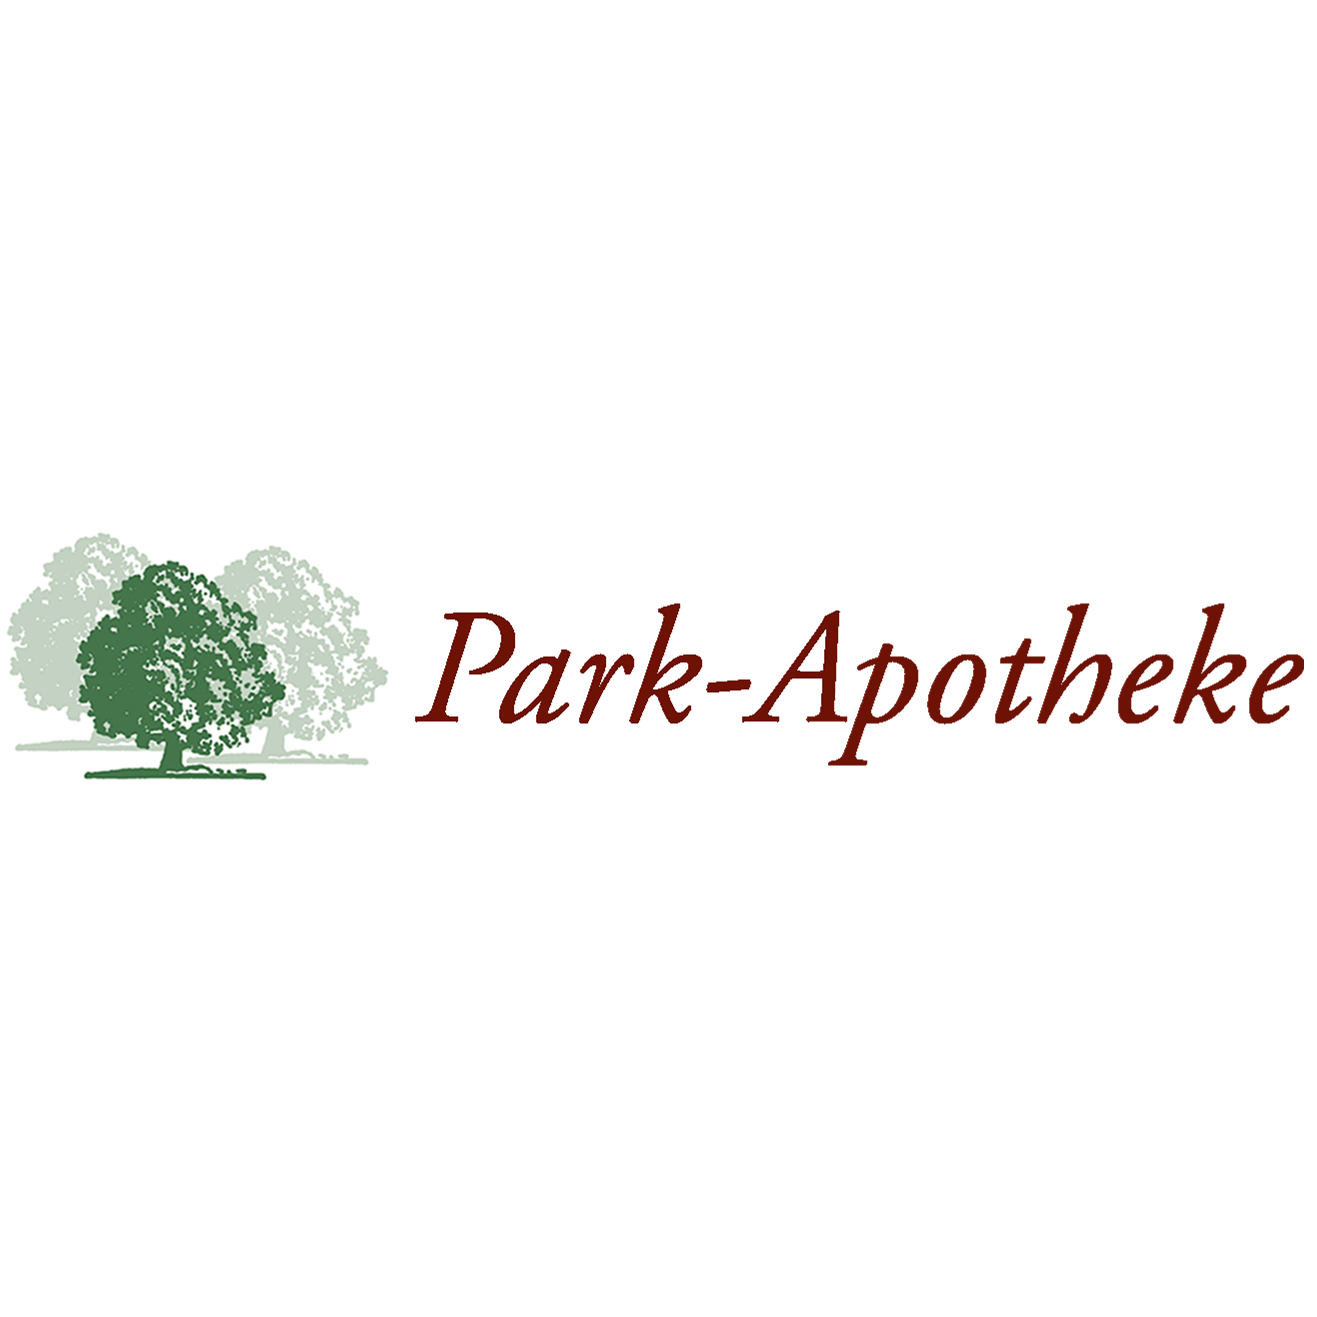 Park-Apotheke in Prenzlau - Logo